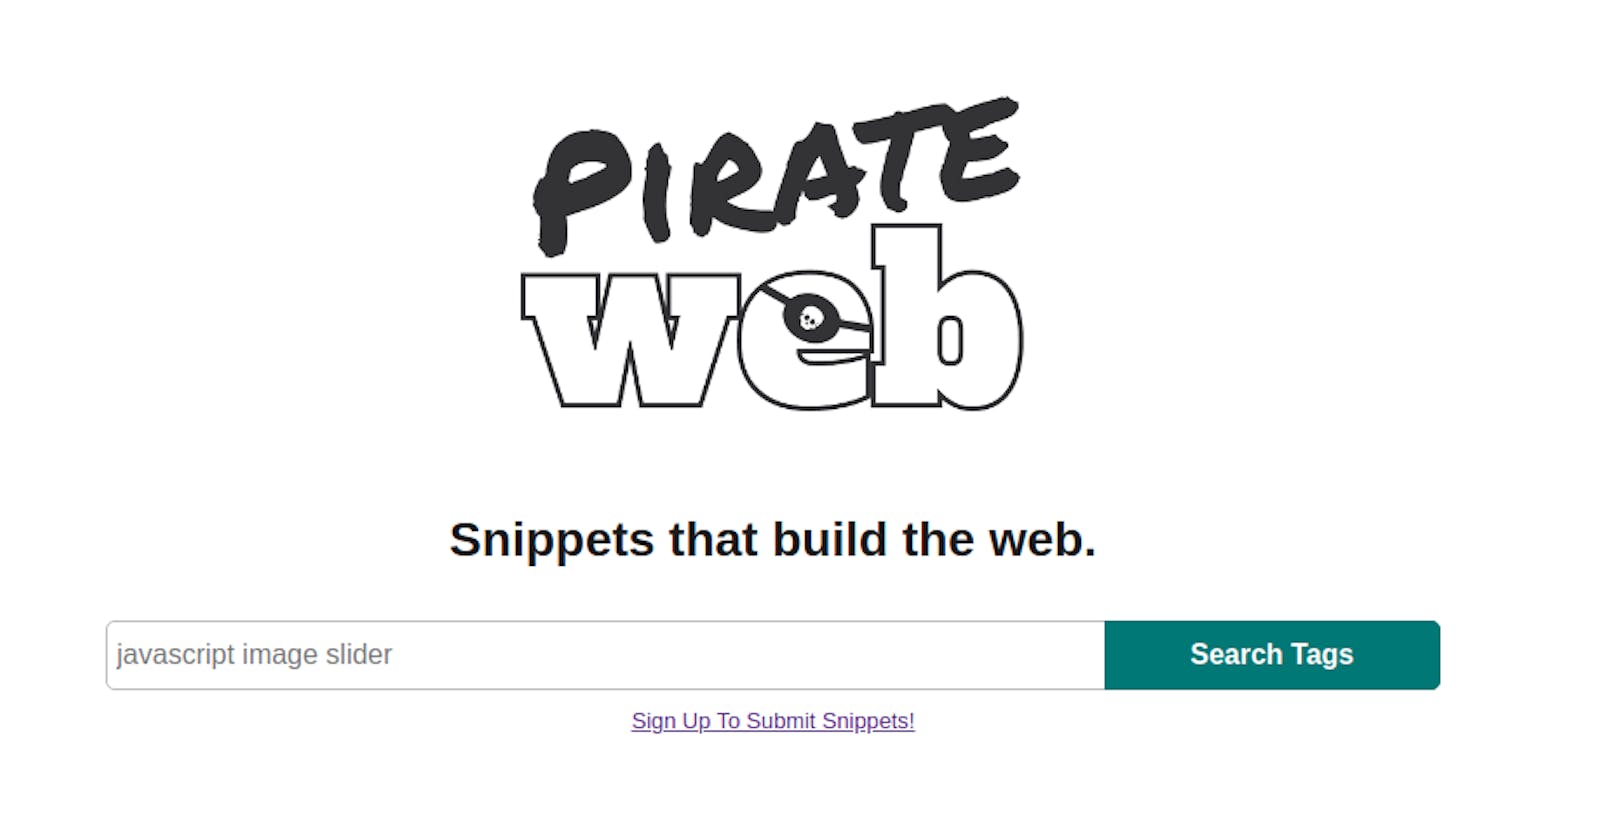 Introducing PirateWeb